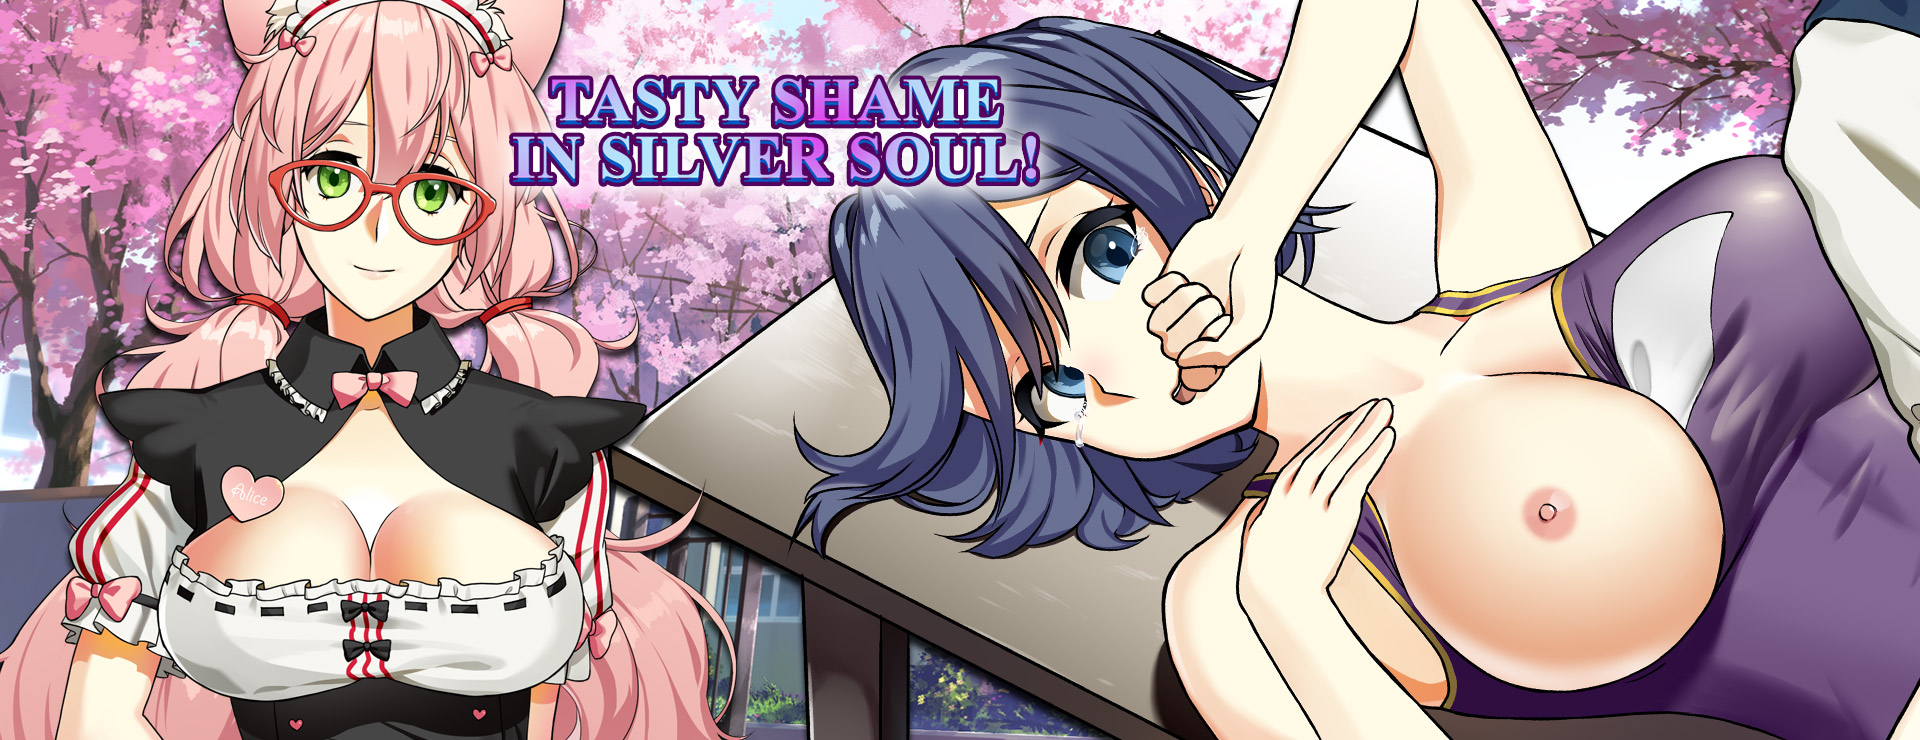 Tasty Shame in Silver Soul - Novela Visual Juego